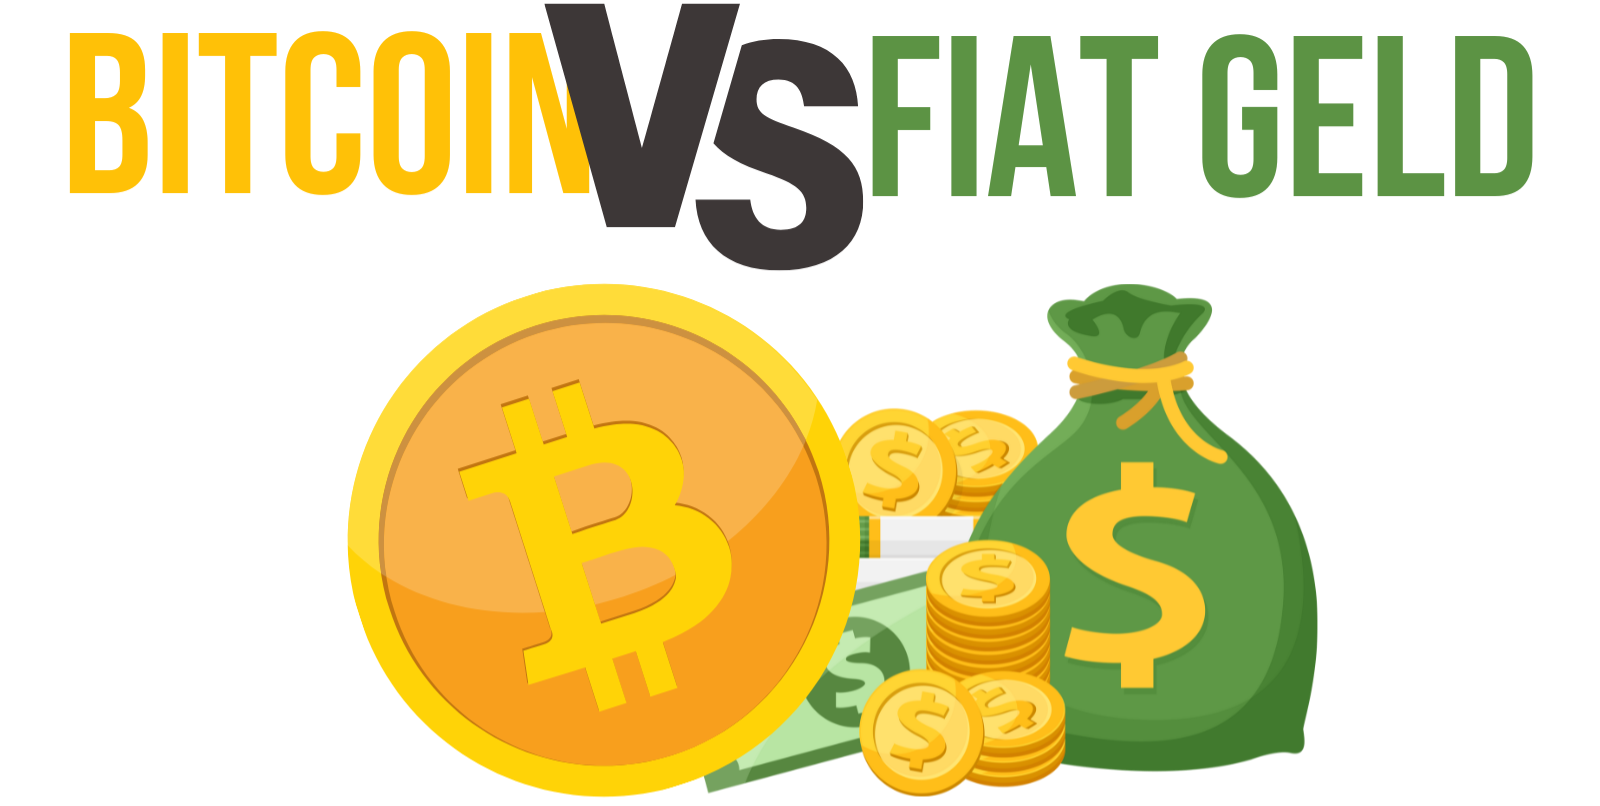 Bitcoin vs. Fiat Geld